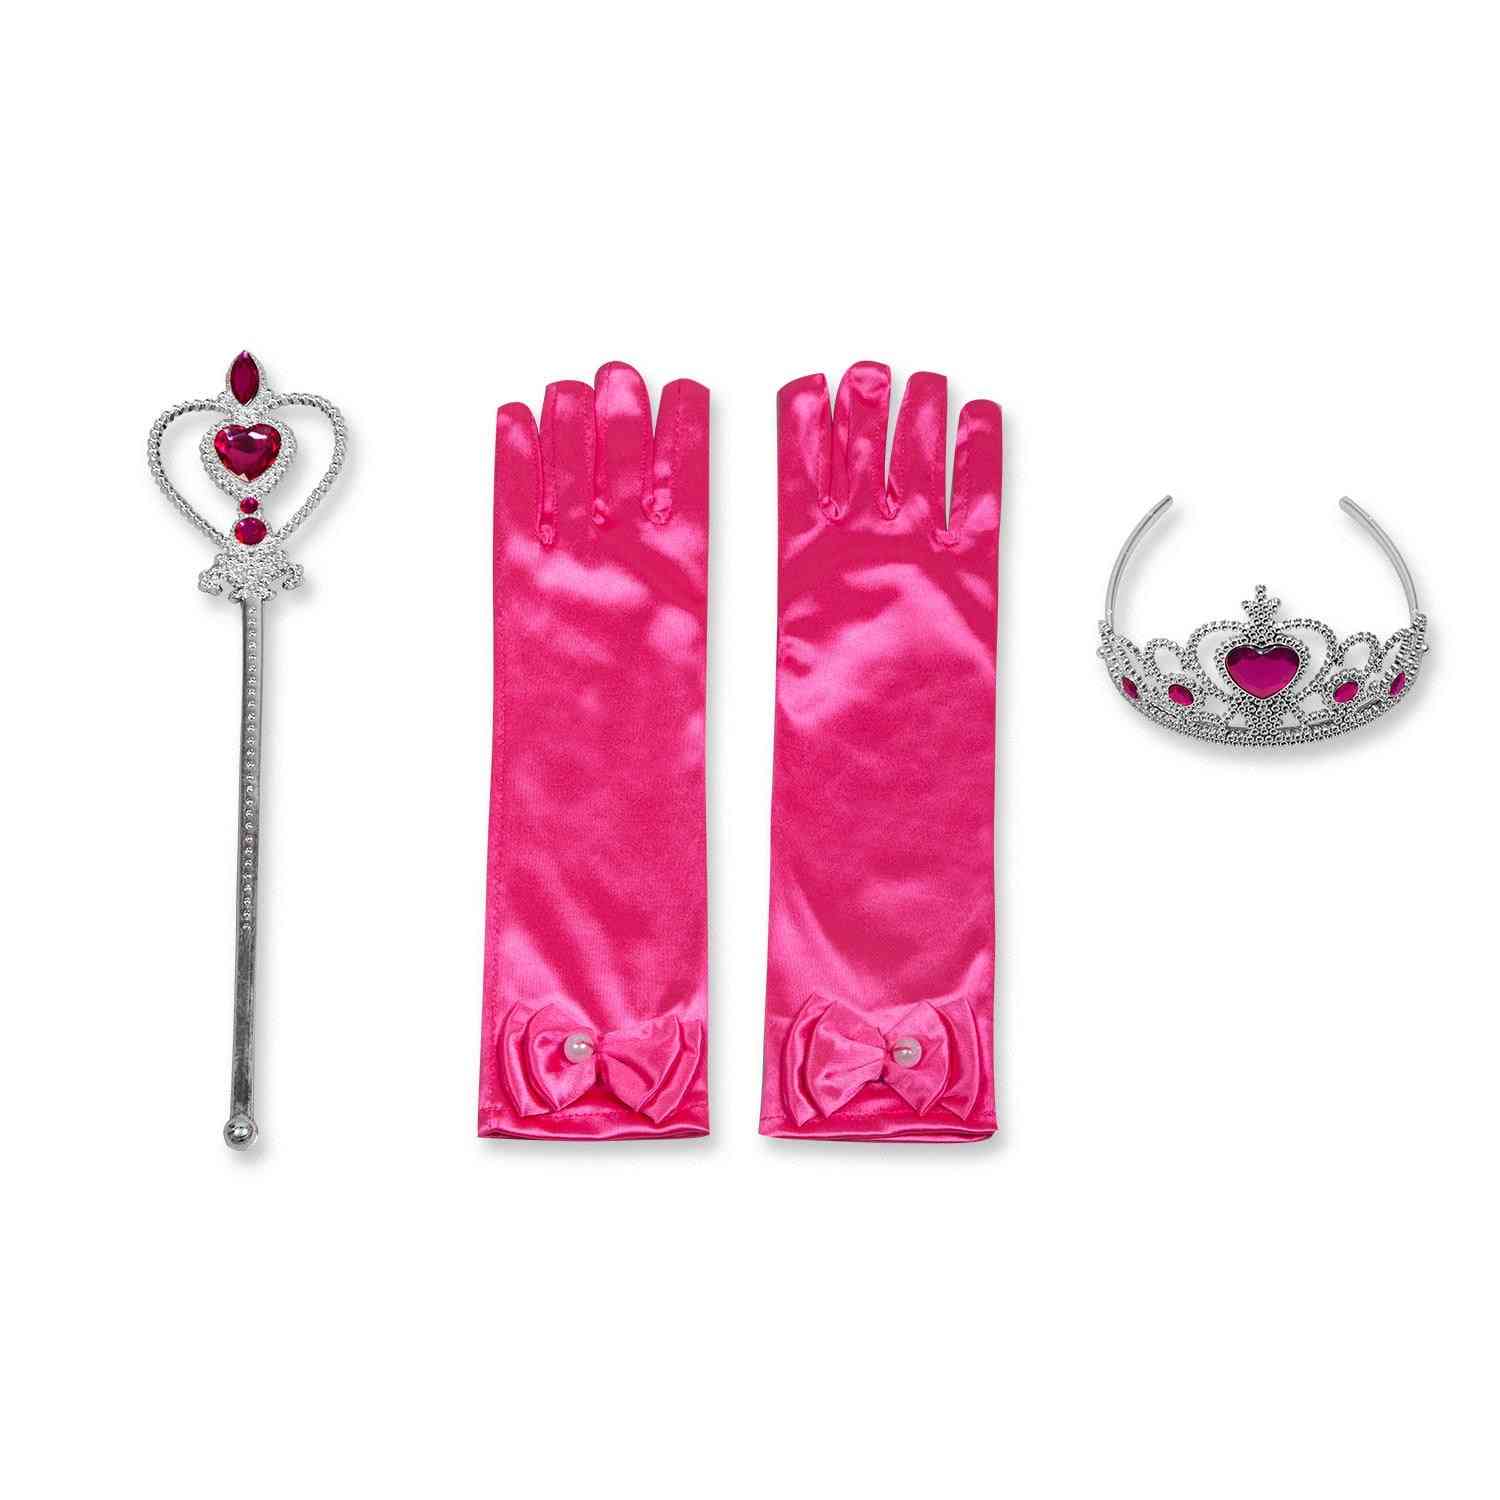 Princezna party- cosplay královna, kouzelná hůlka, diadémové rukavice, sada do vlasů s parukou